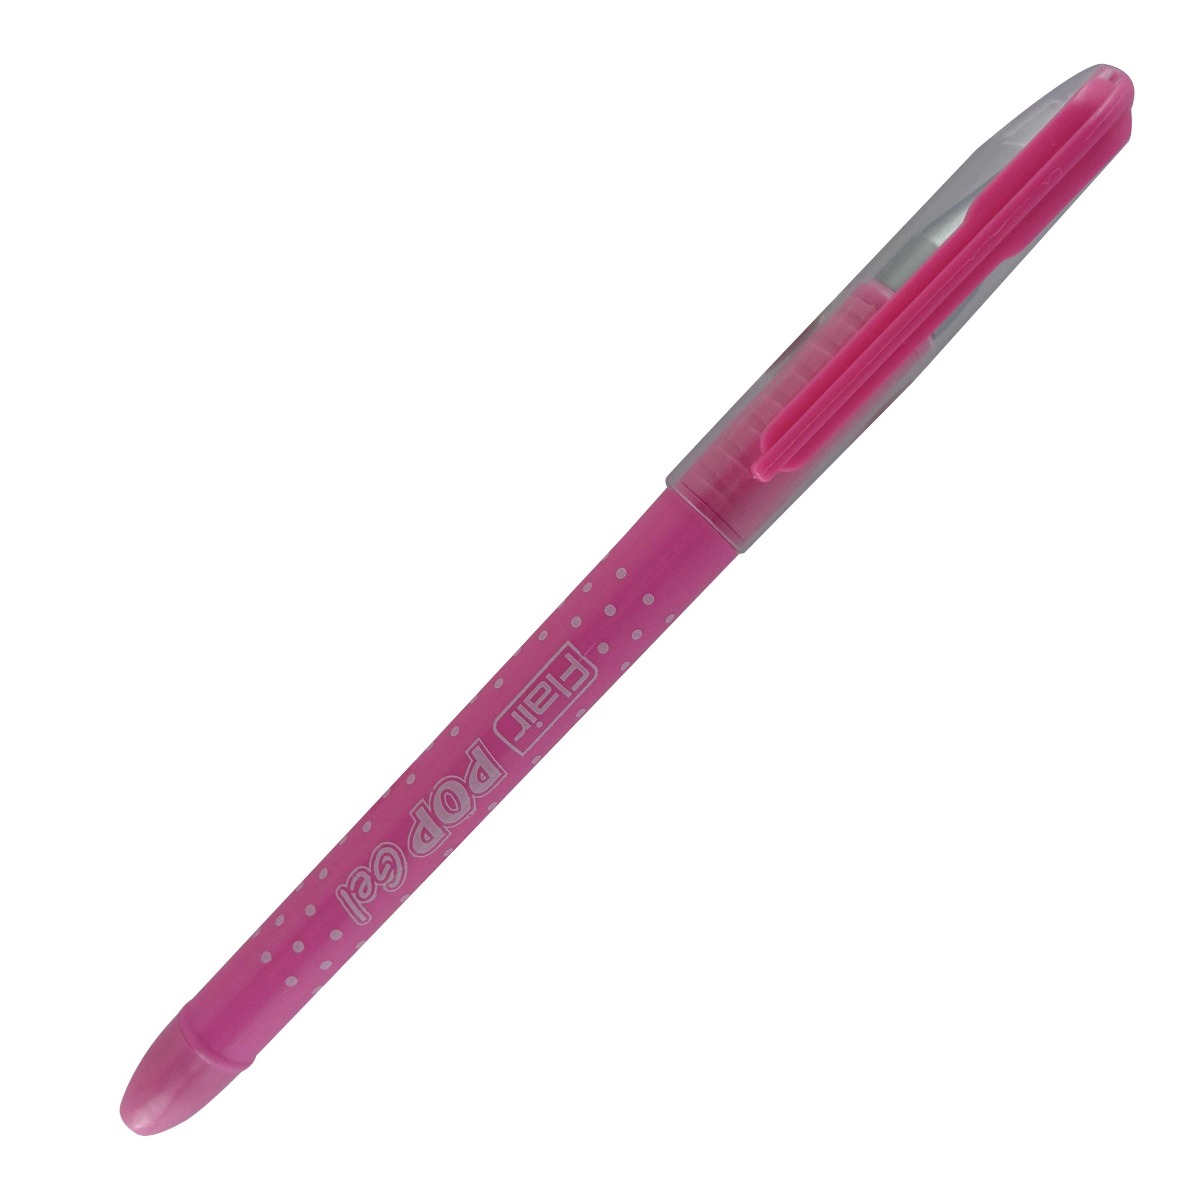 Flair Model: 15038 pop gel Pink color body with fine tip cap type blue ink gel pen